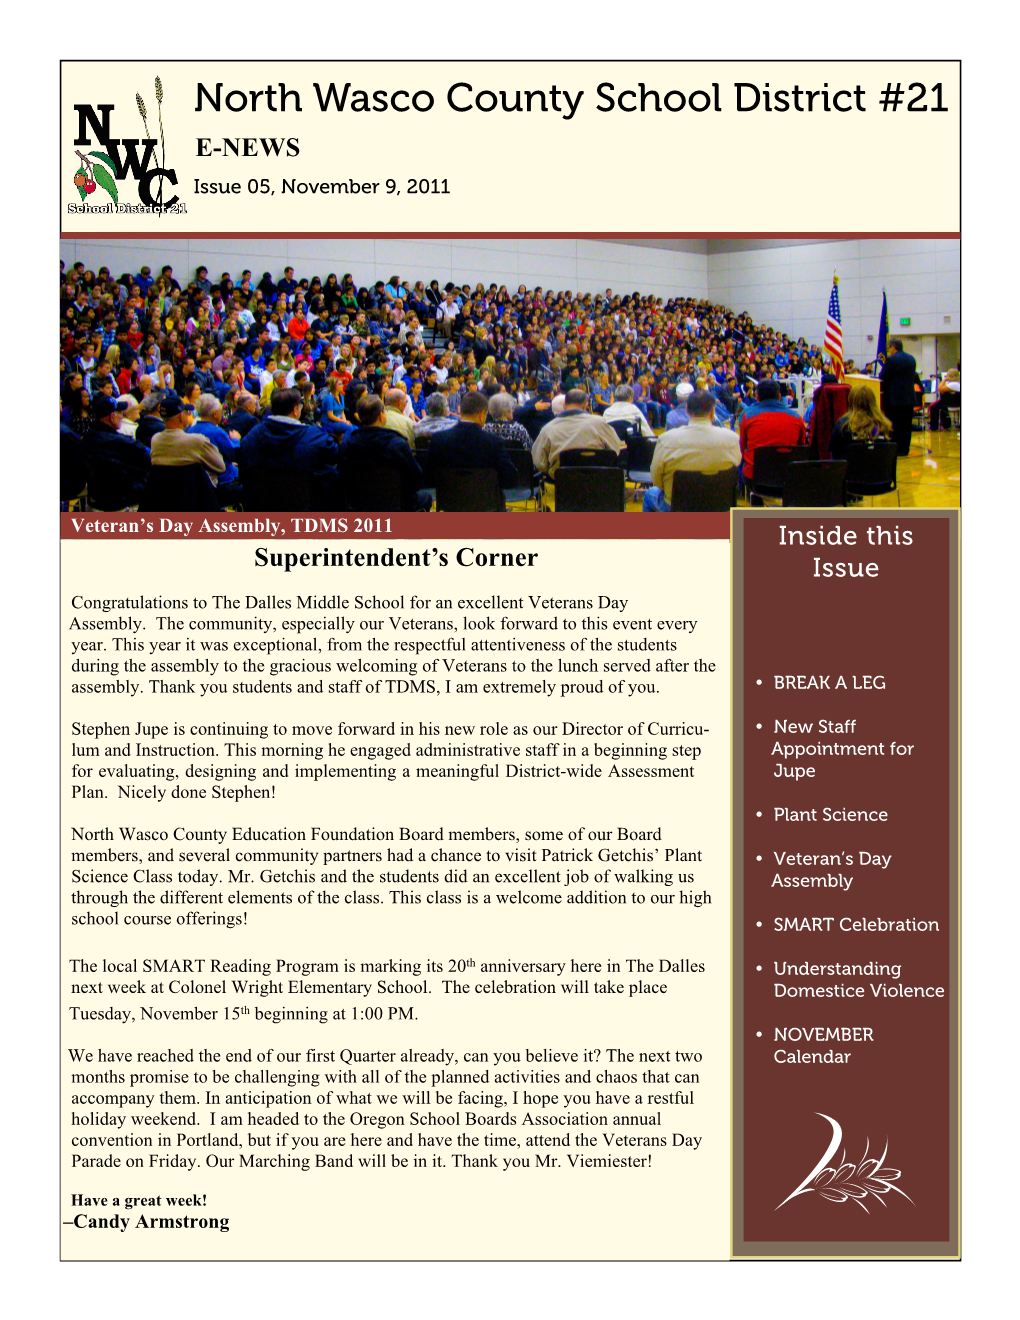 North Wasco County School District #21 E-NEWS Issue 05, November 9, 2011